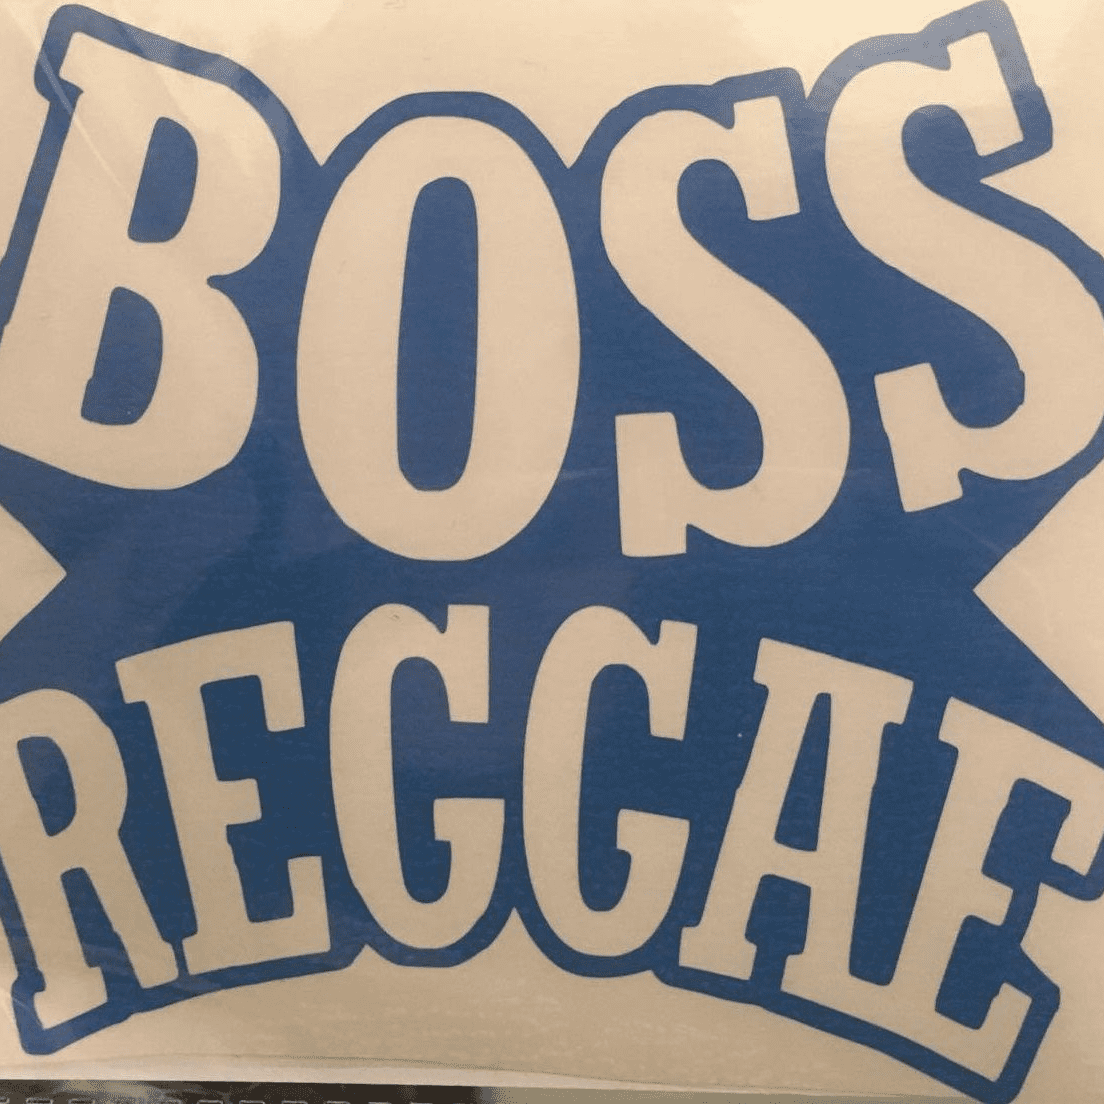 Boss Reggae Blue Sticker